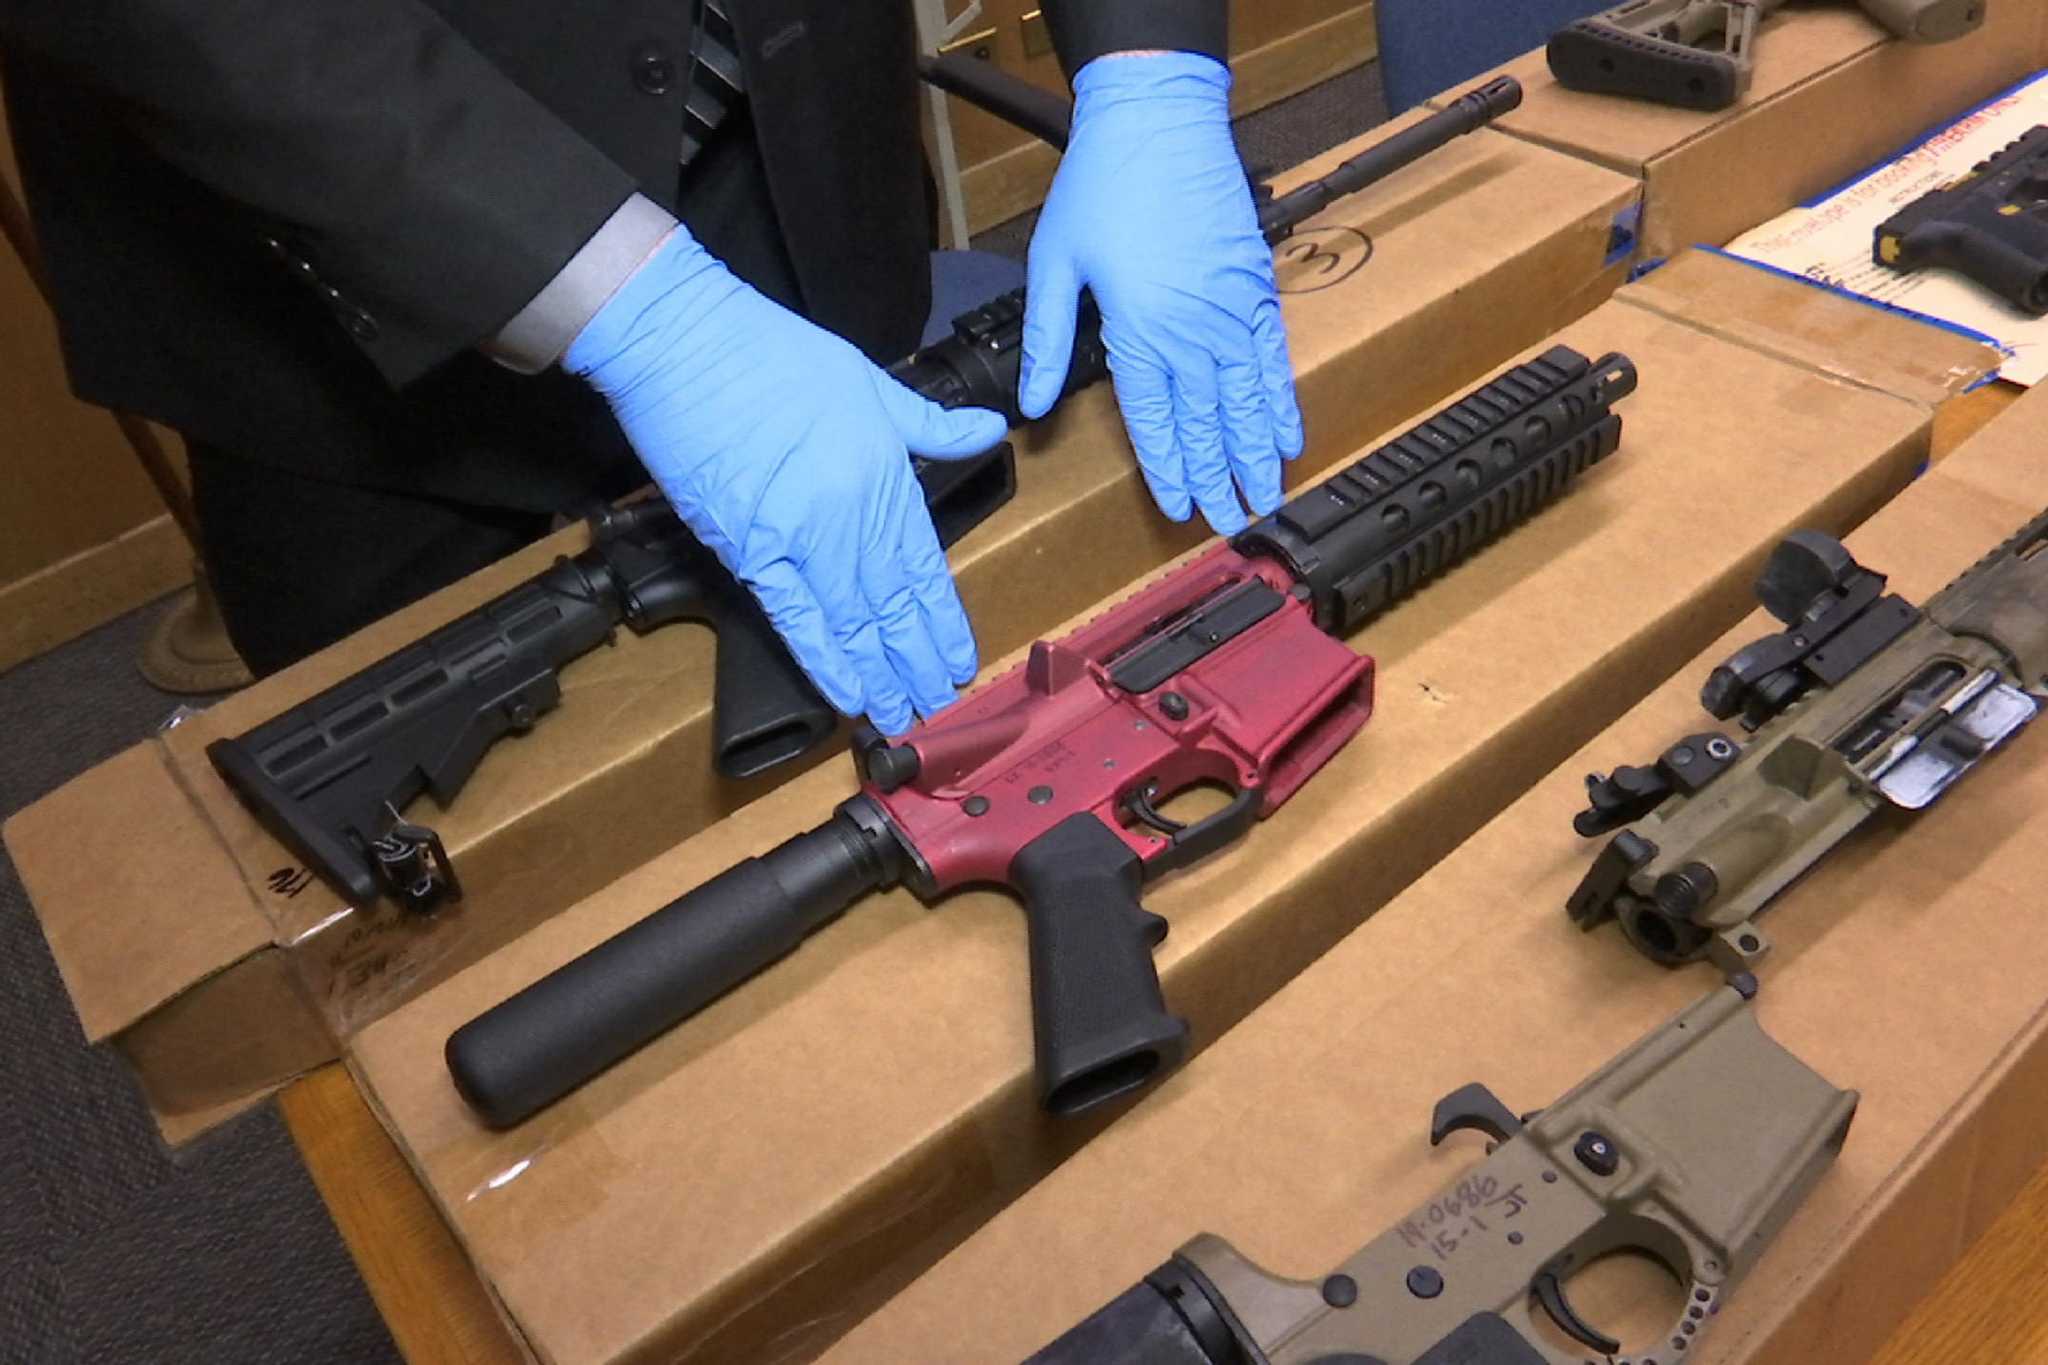 Houstonarea company says Biden Administration's 'ghost gun' policy